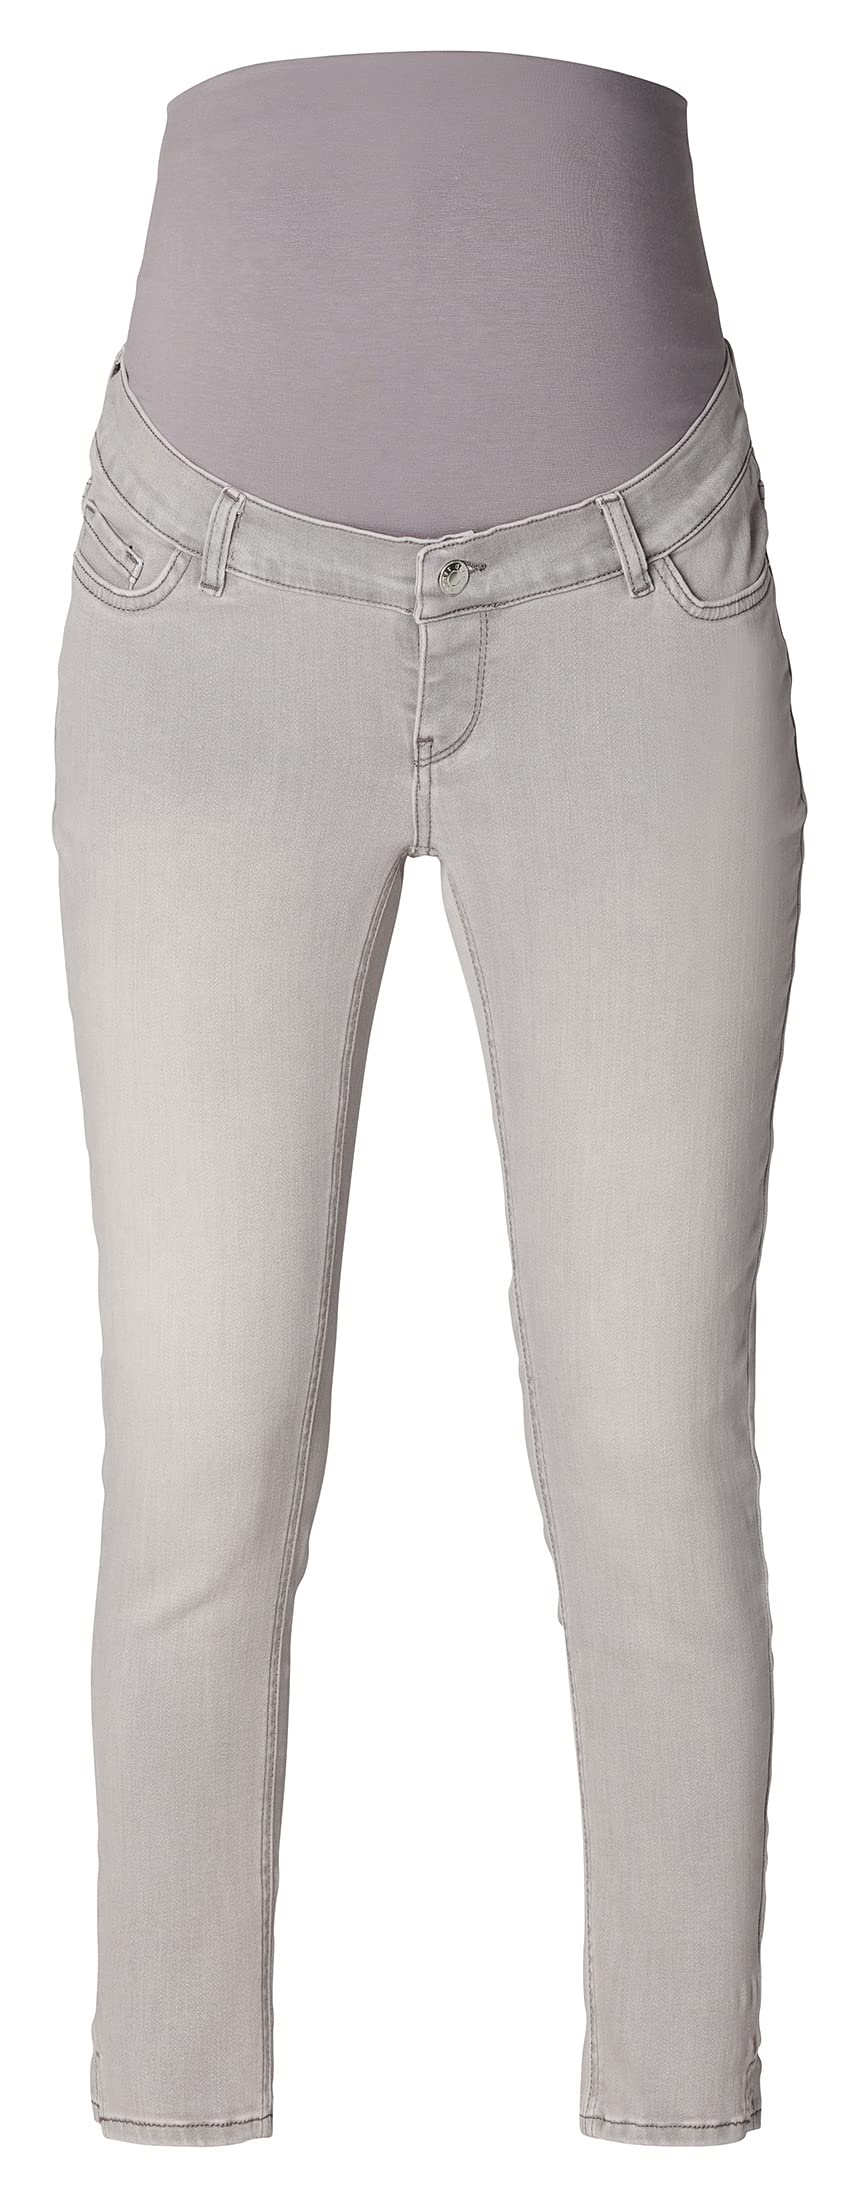 ESPRIT Maternity Damen Pants Denim Skinny Over The Belly 7/8 Jeans, Grey Denim-920, 38